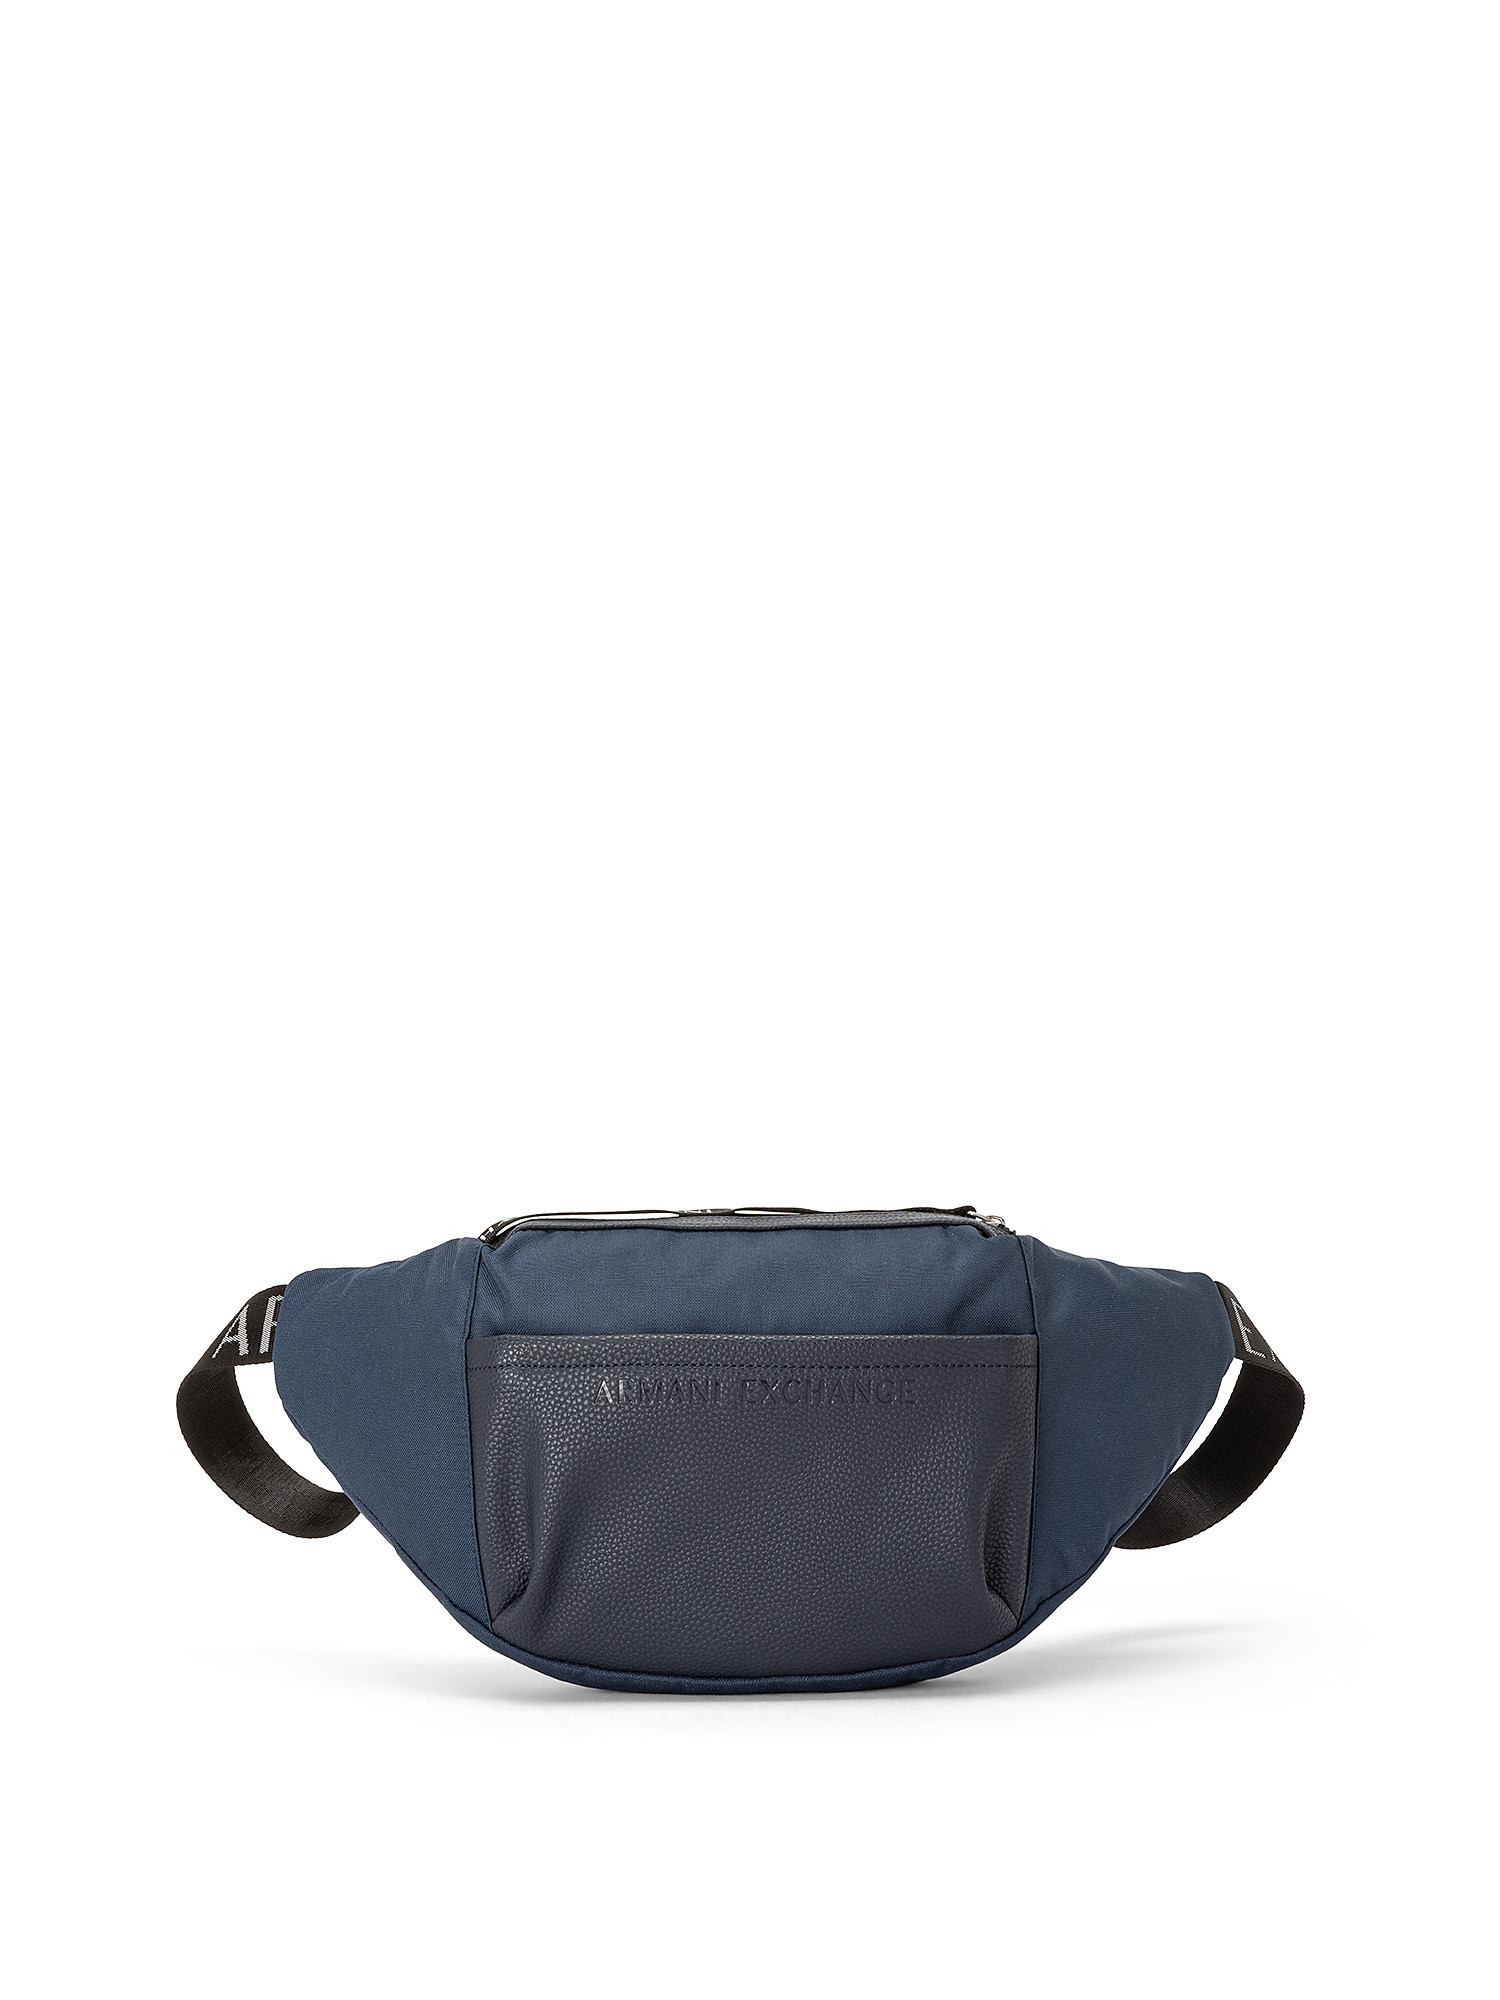 Armani Exchange - Waist bag with logo tape, Blue, large image number 0